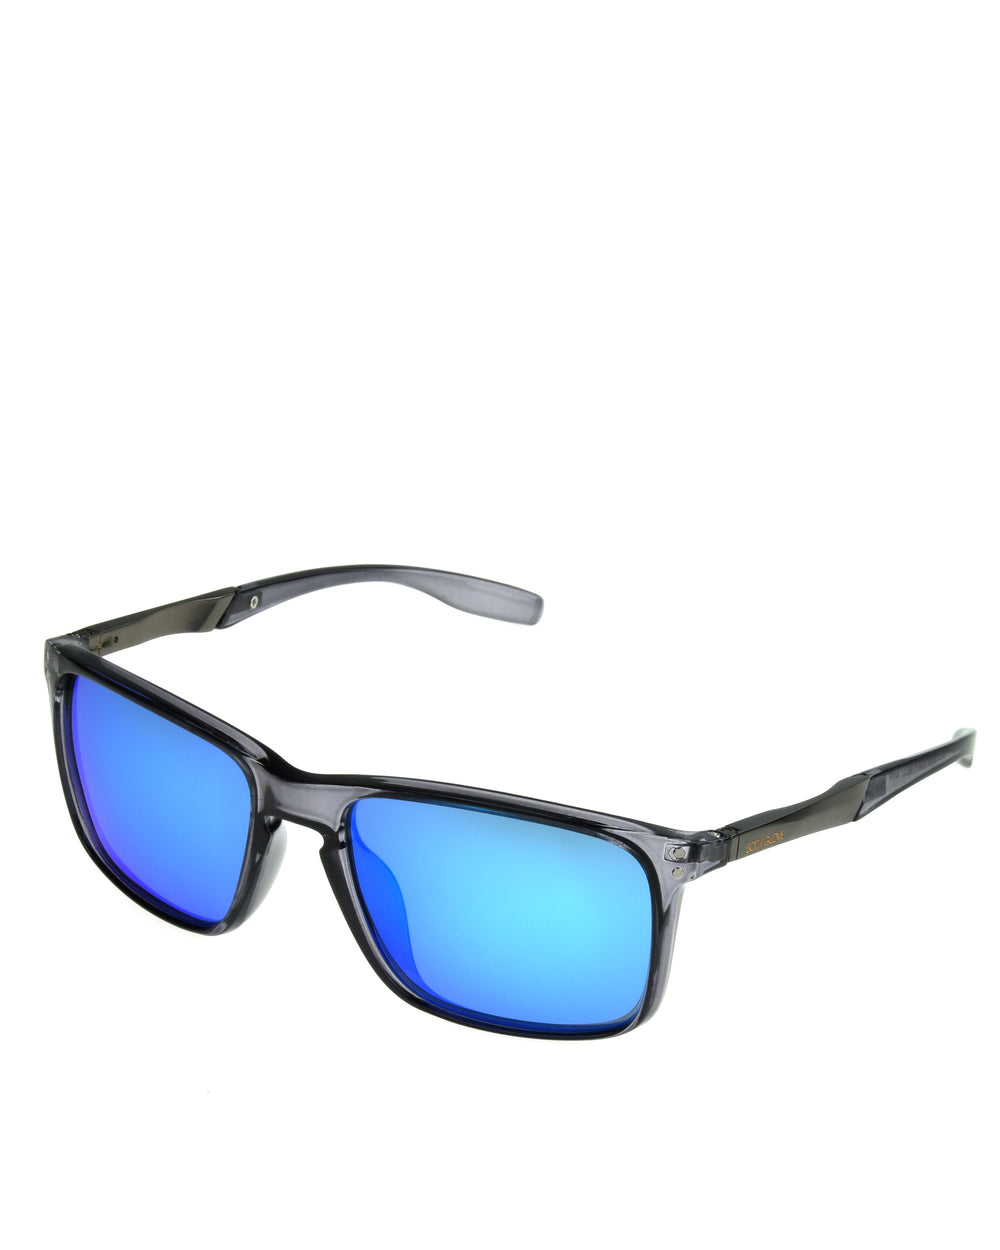 Men's BG1803 Polarized Sunglasses - Grey